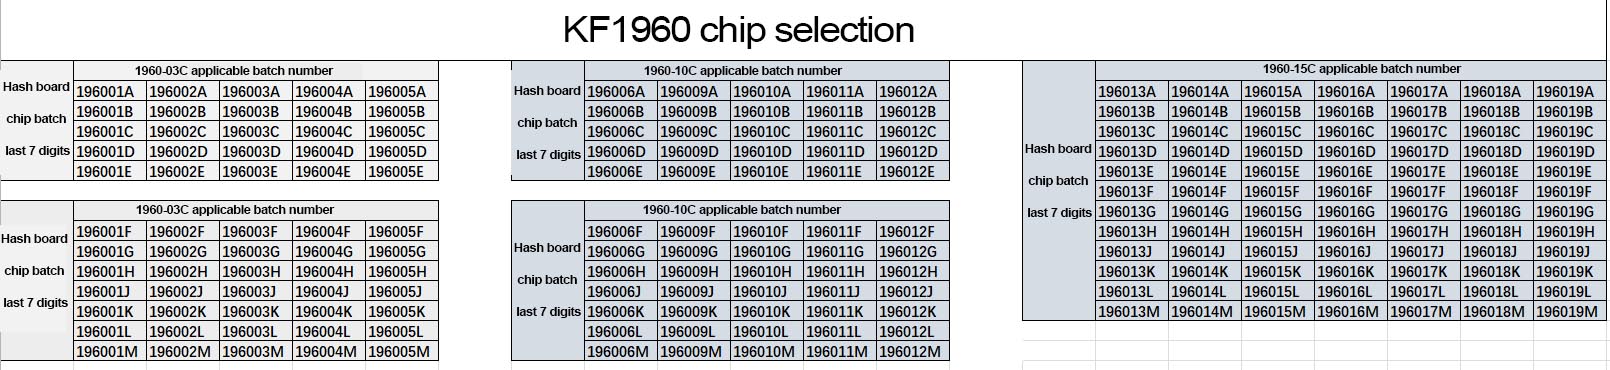 KF1960 chip selection table